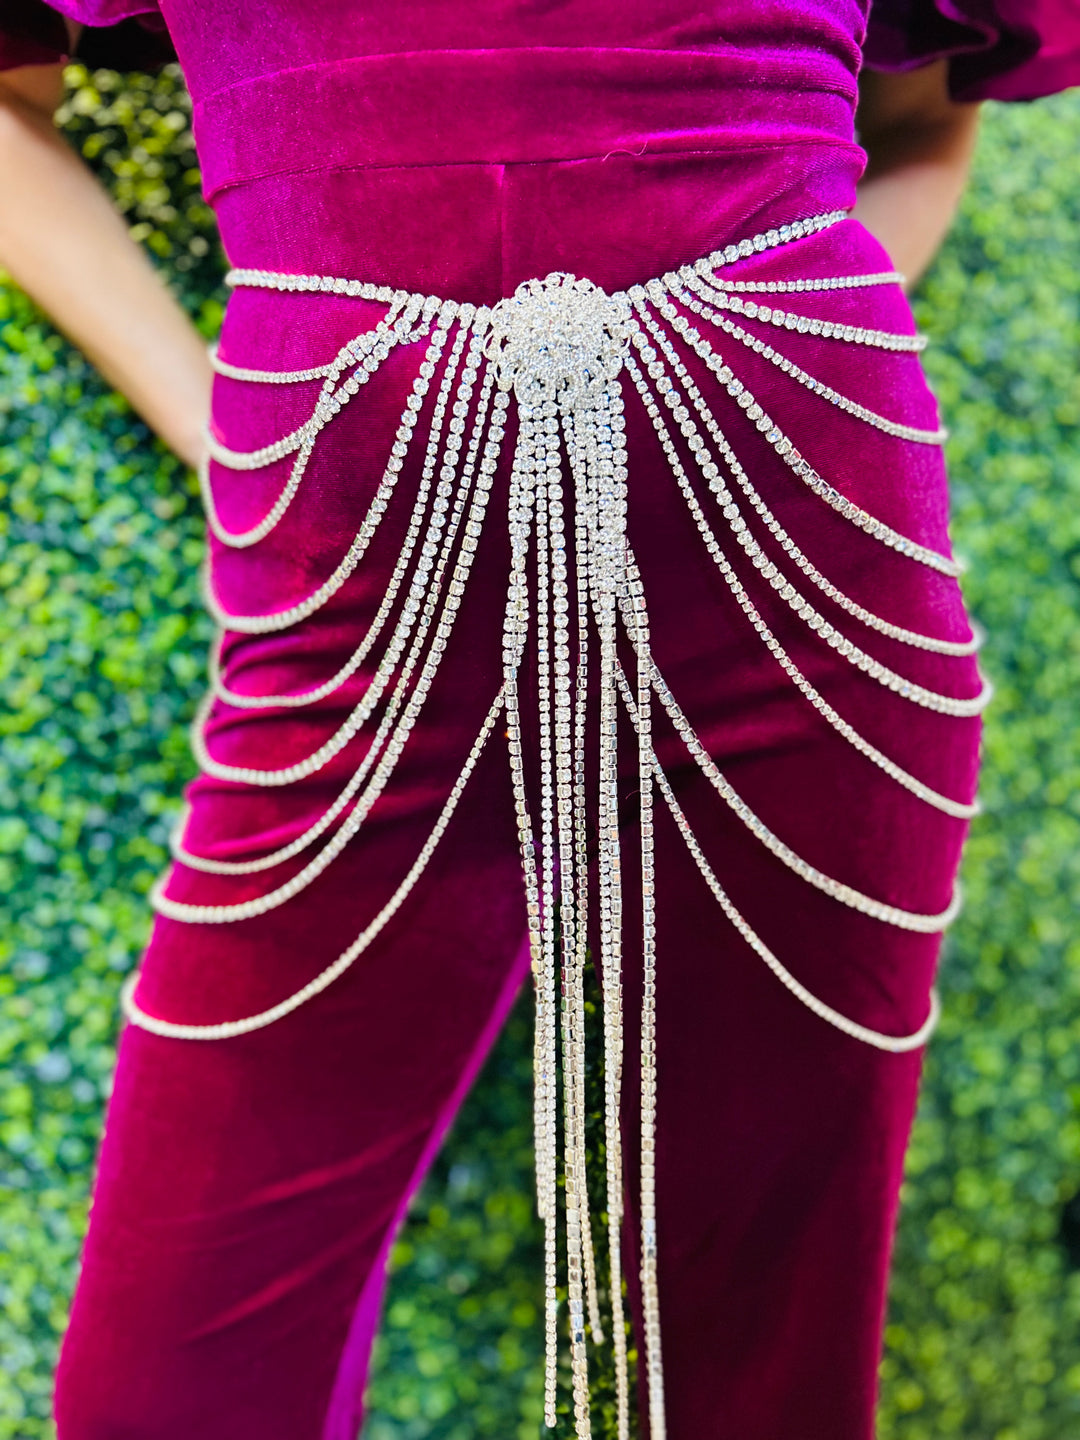 MAGIC MOVES Rhinestone Fringe Belt Skirt-Accessories-Malandra Boutique-Malandra Boutique, Women's Fashion Boutique Located in Las Vegas, NV